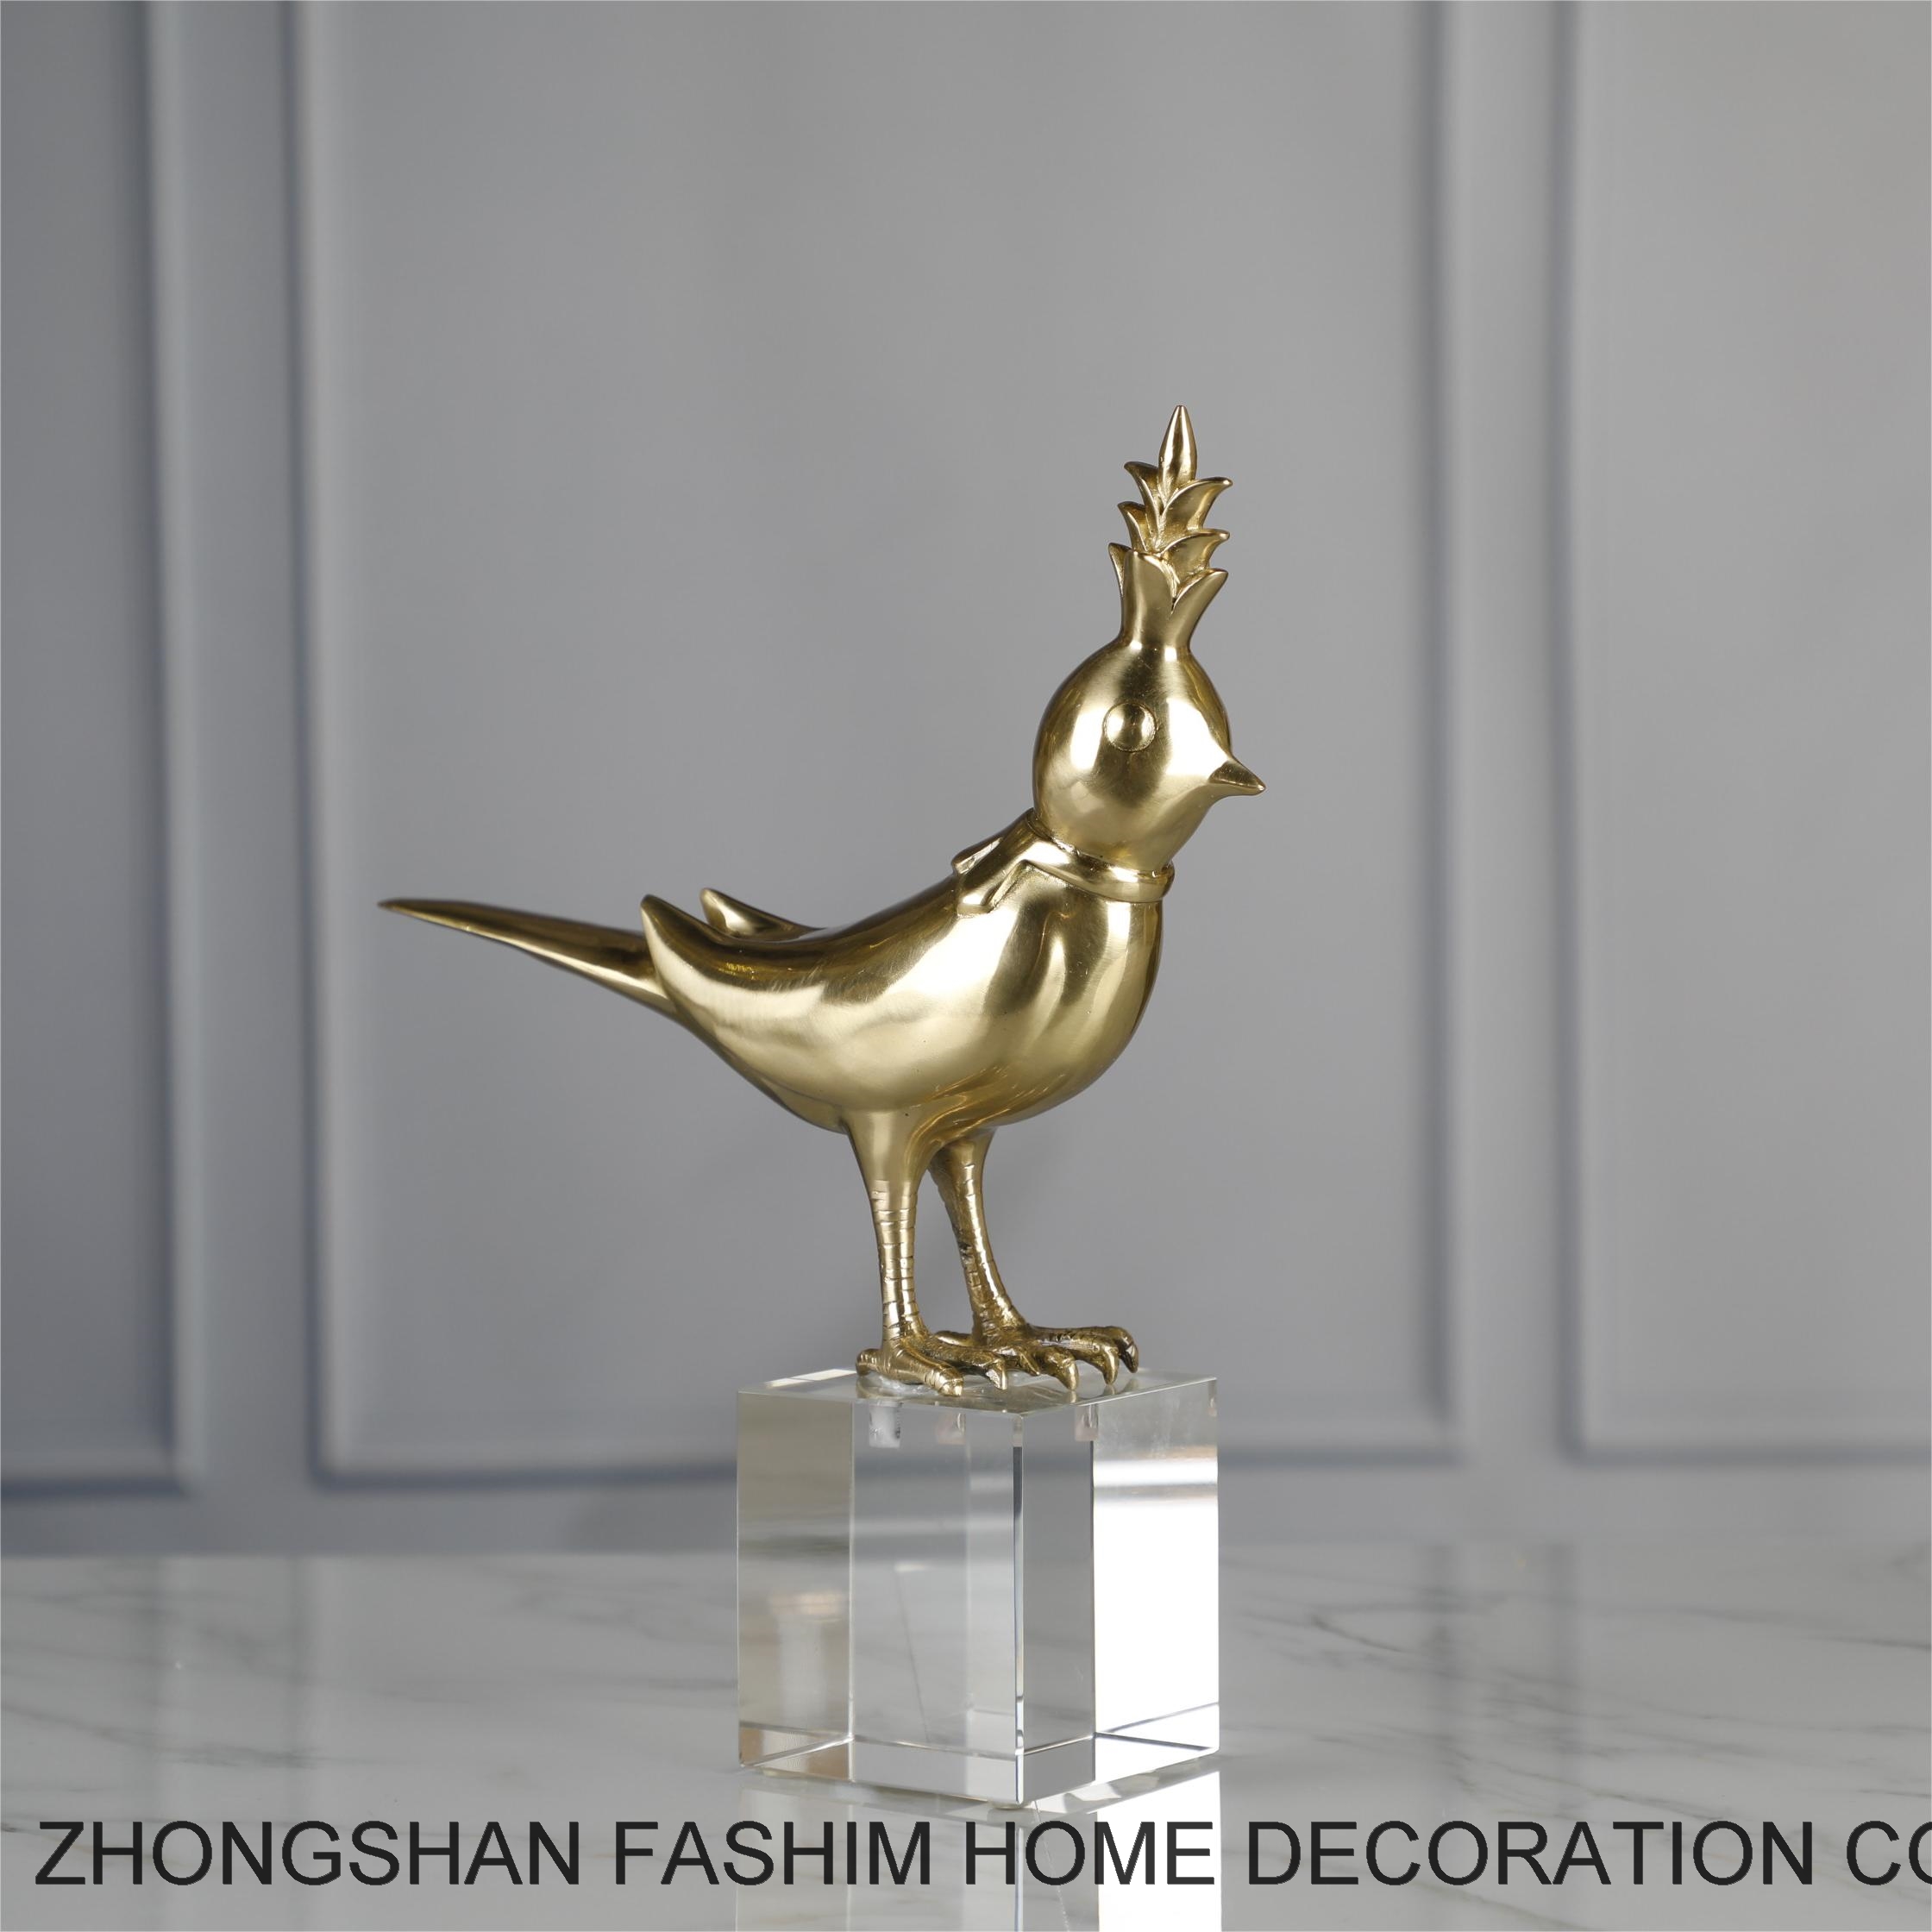 Fashimdecor modern home decoration brass sculpture ornaments